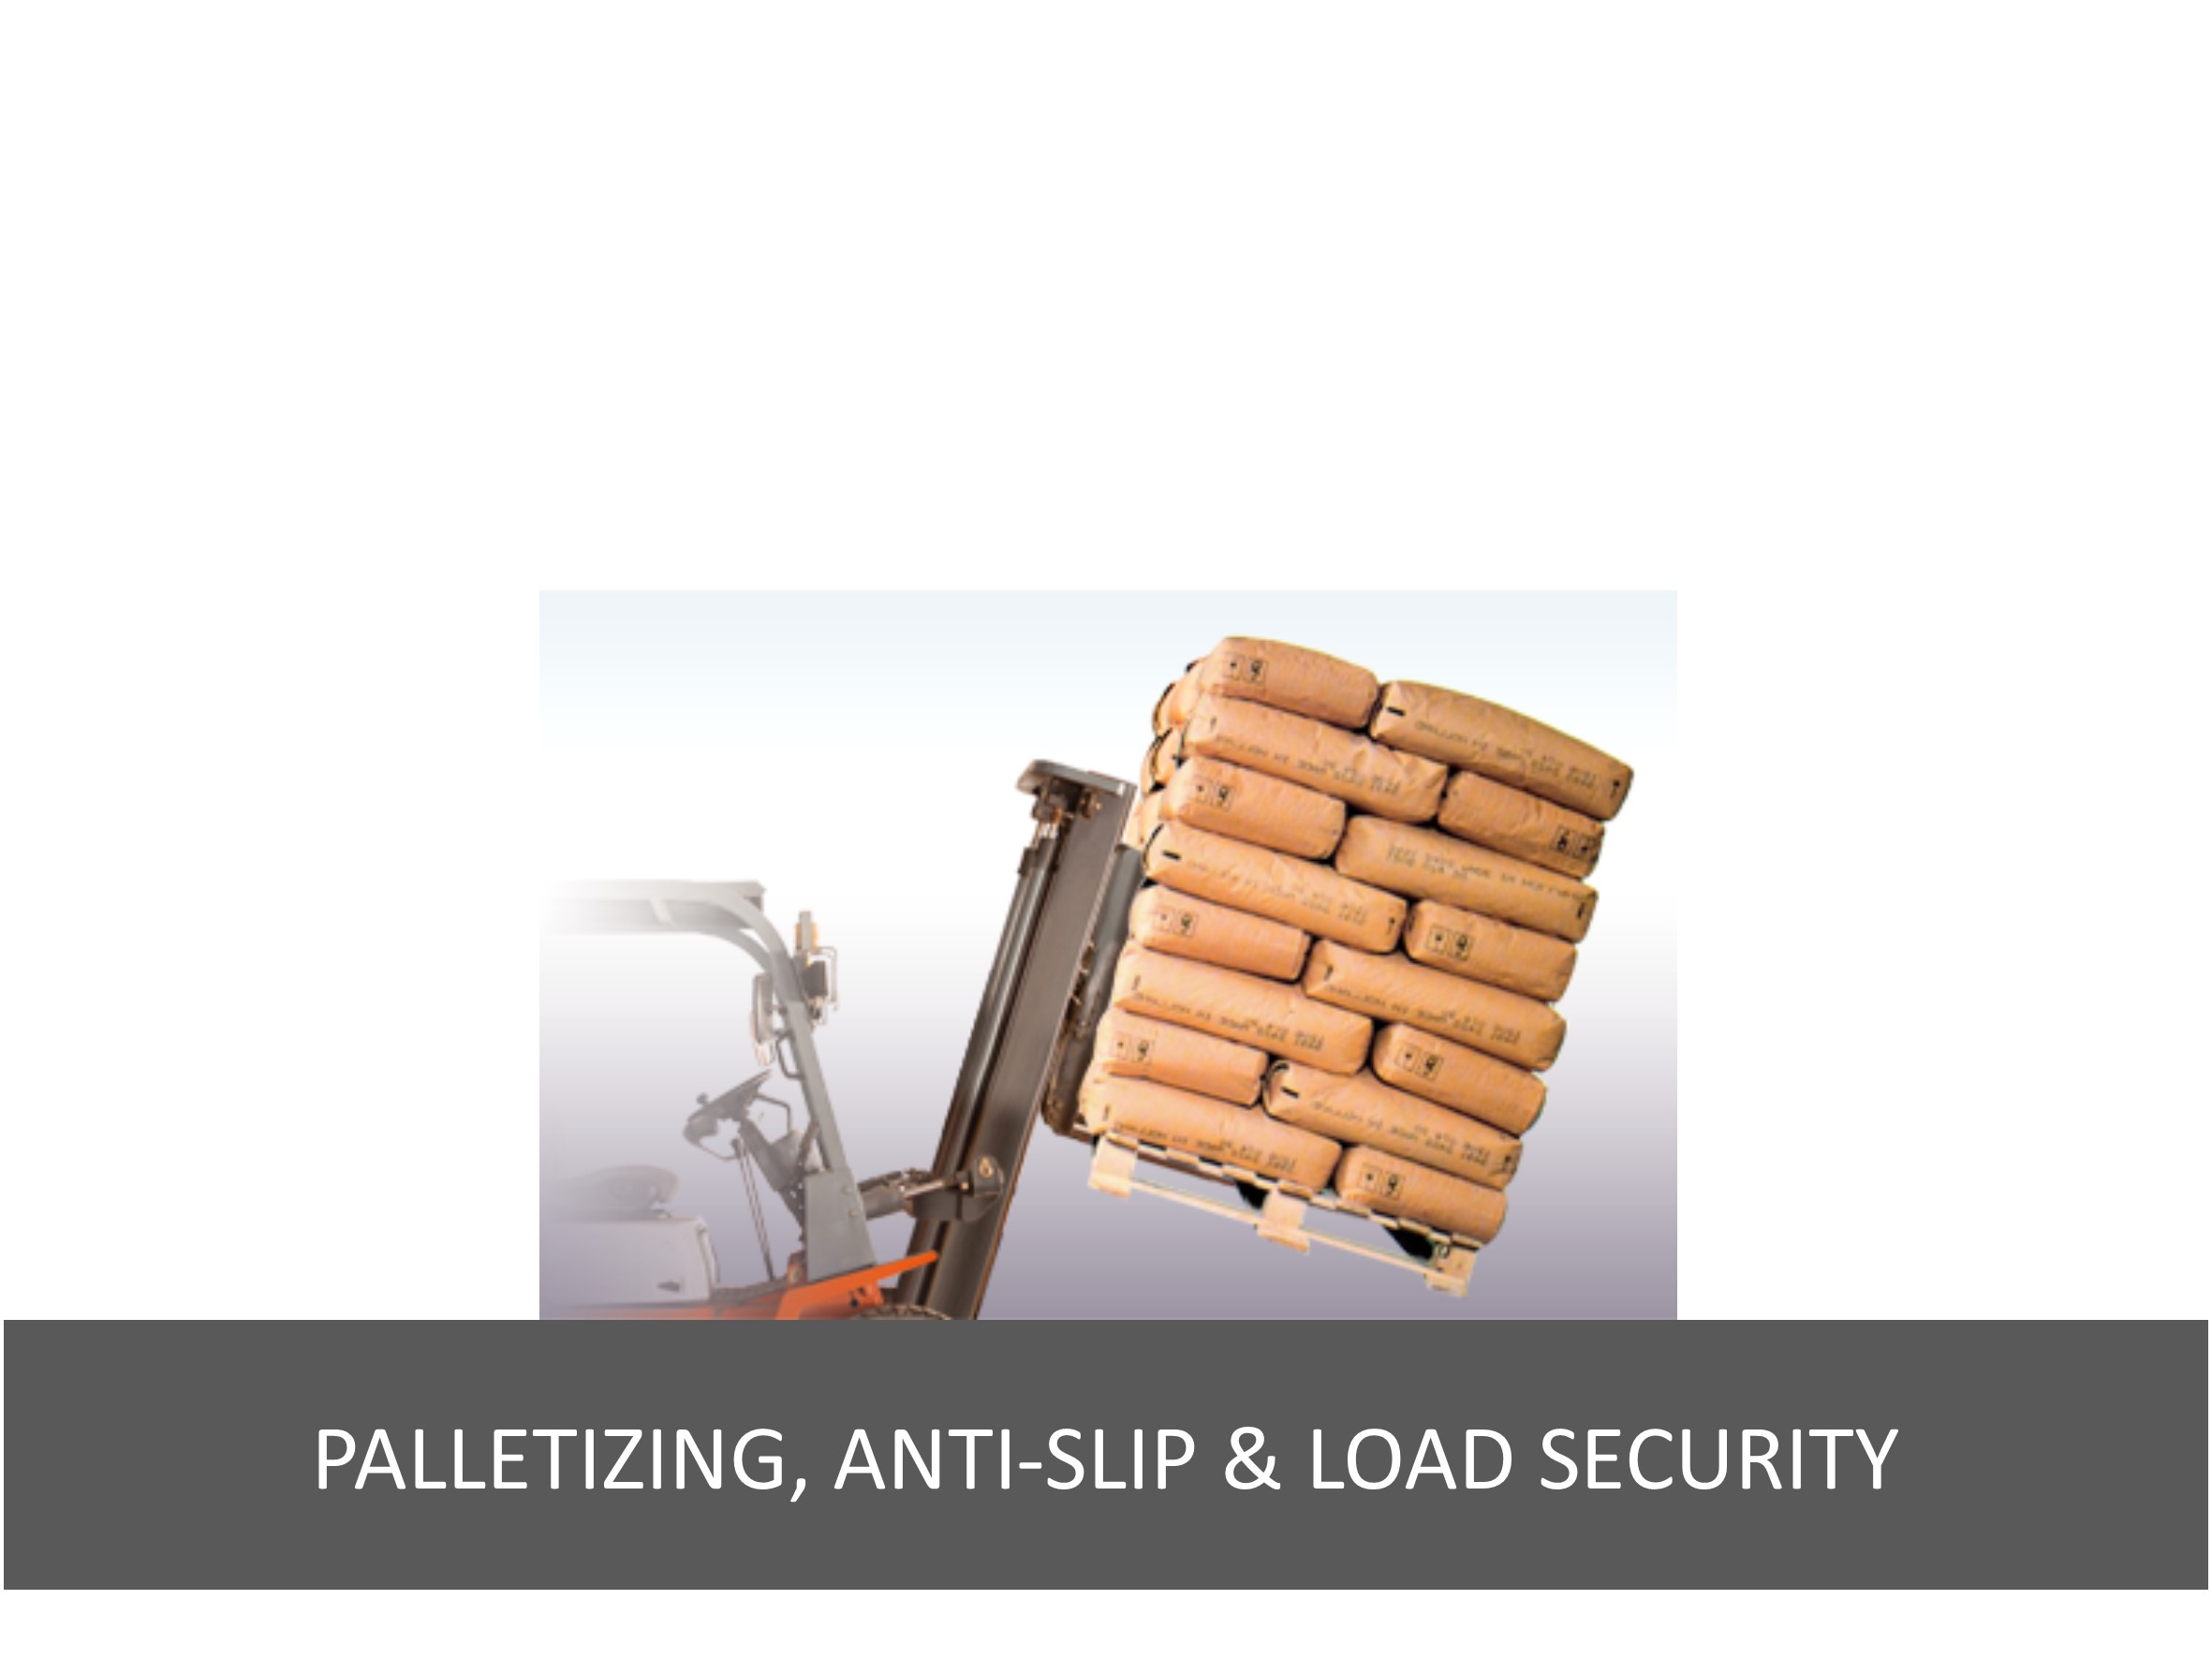 Palletizing, anti-slip & load security